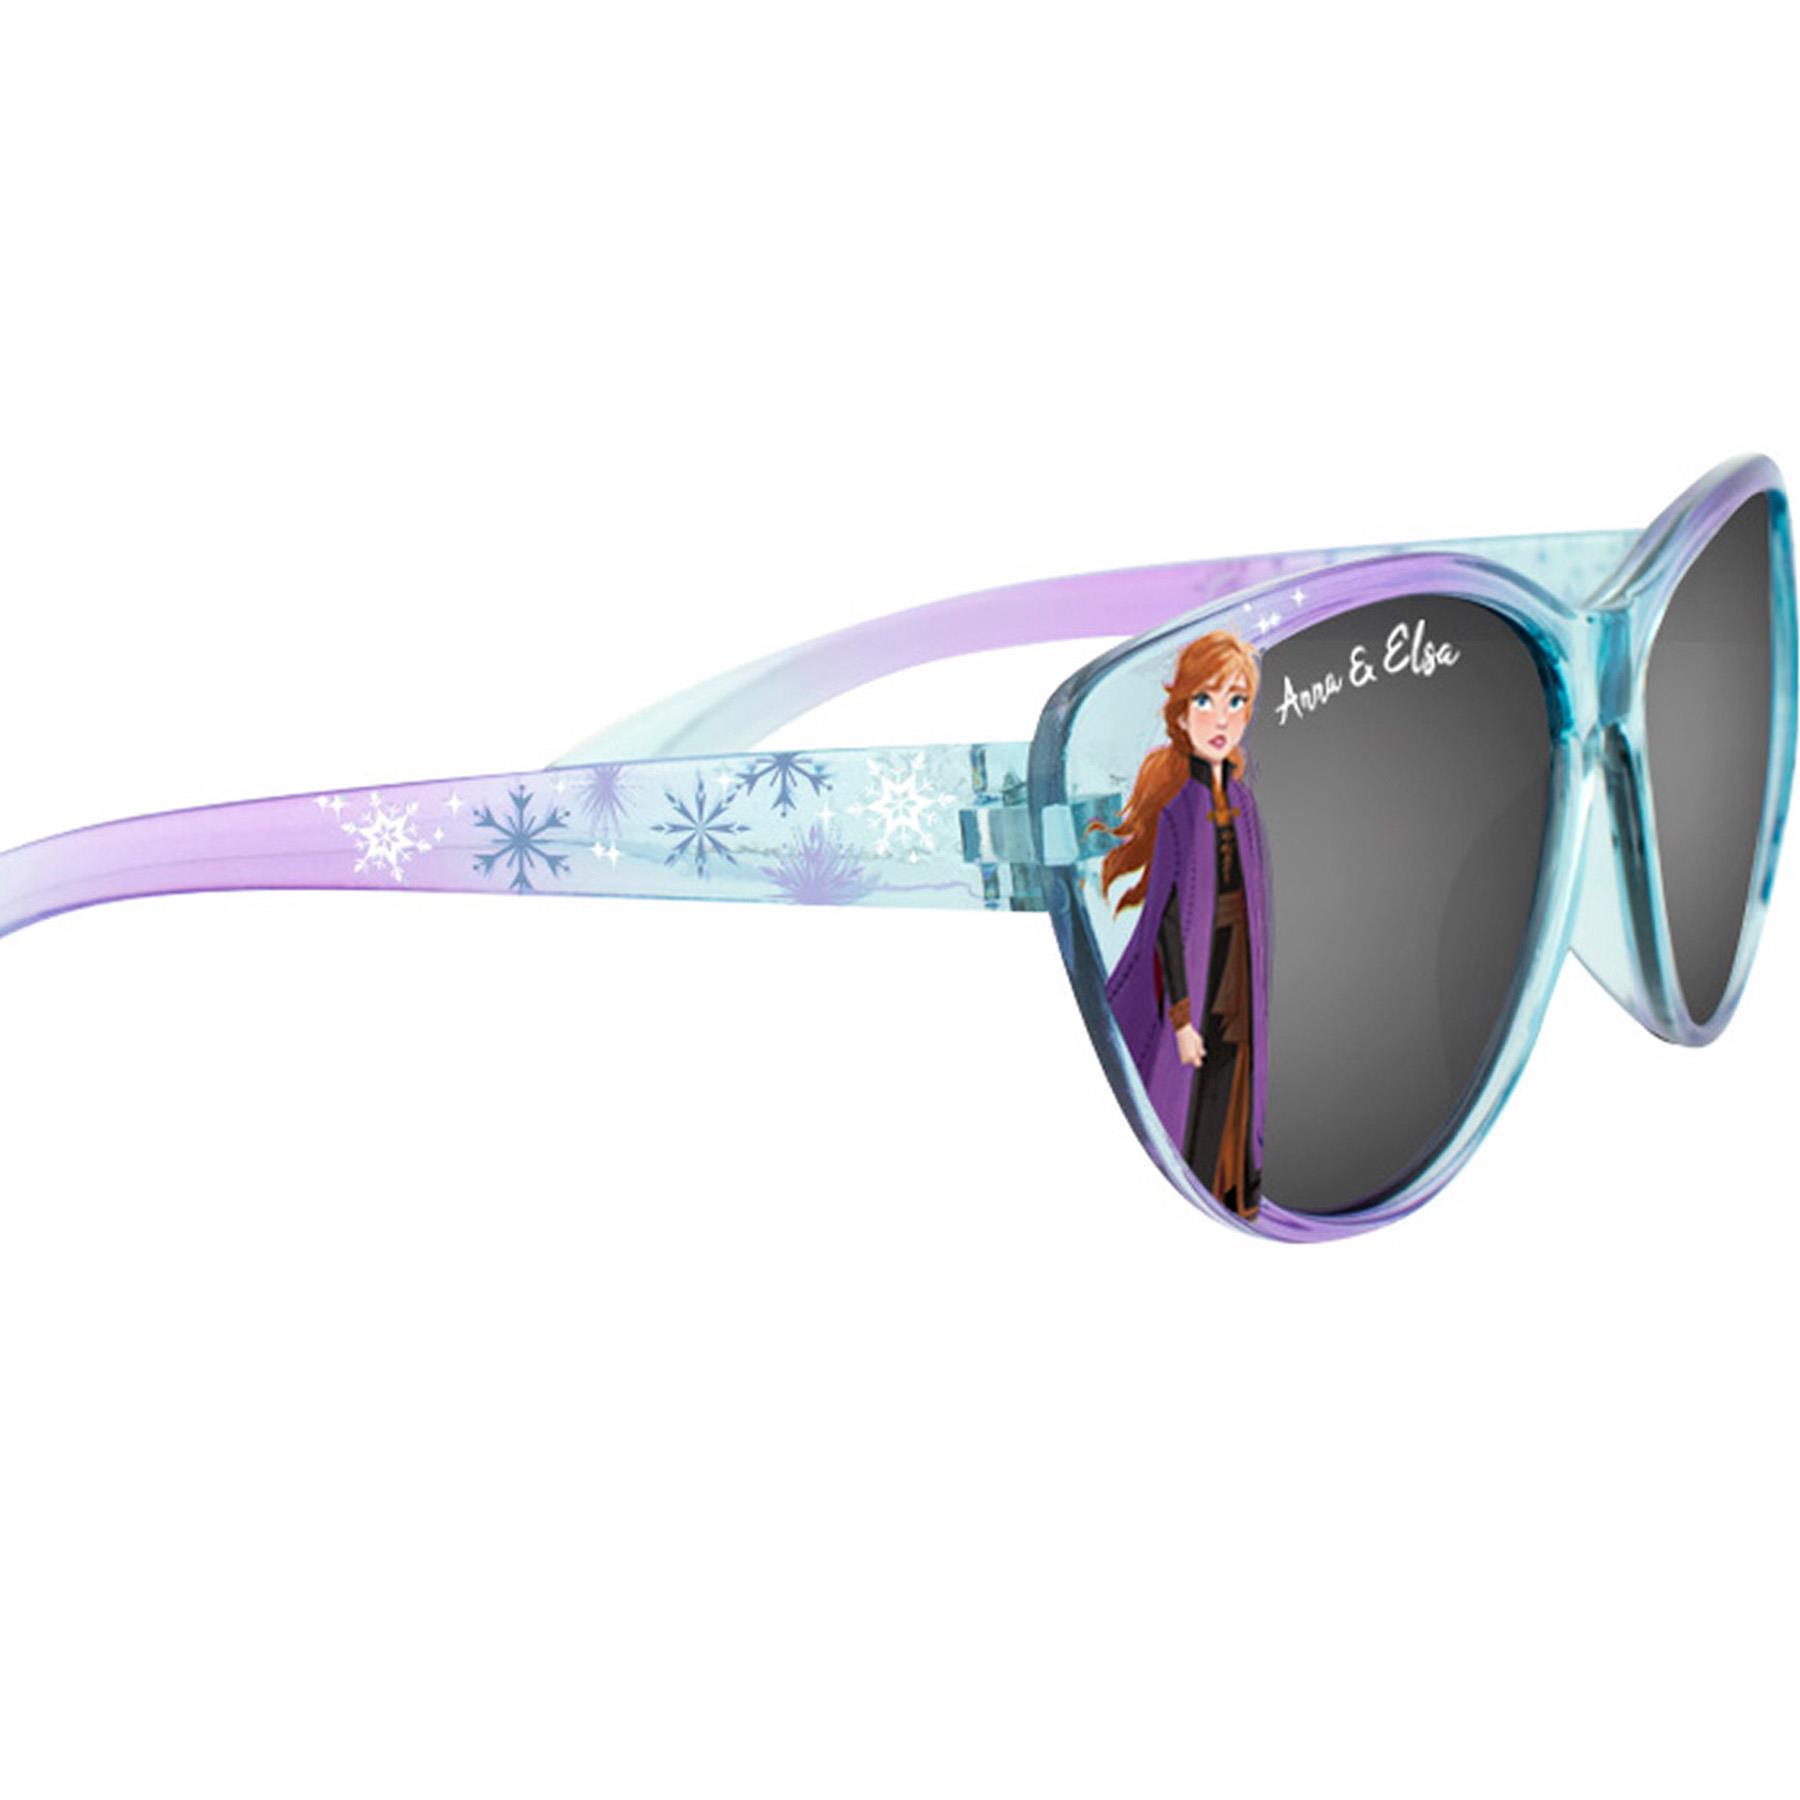 Disney Frozen Children's Sunglasses UV protection for Holiday - FROZEN10